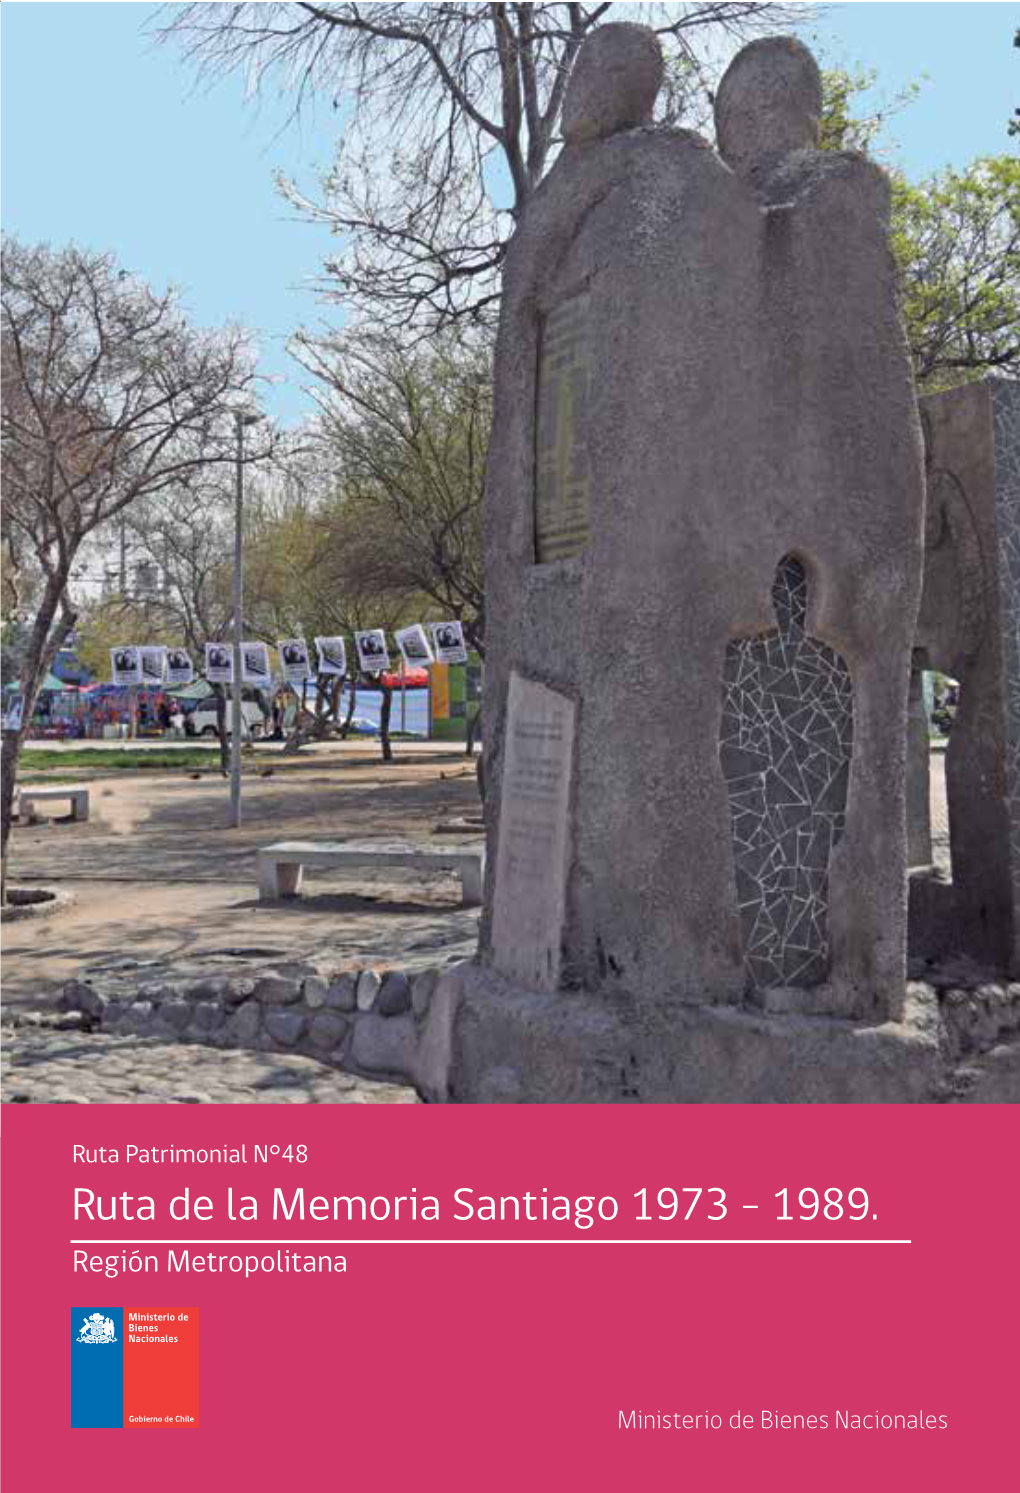 Ruta De La Memoria the Route of Memory Santiago 1973-1989